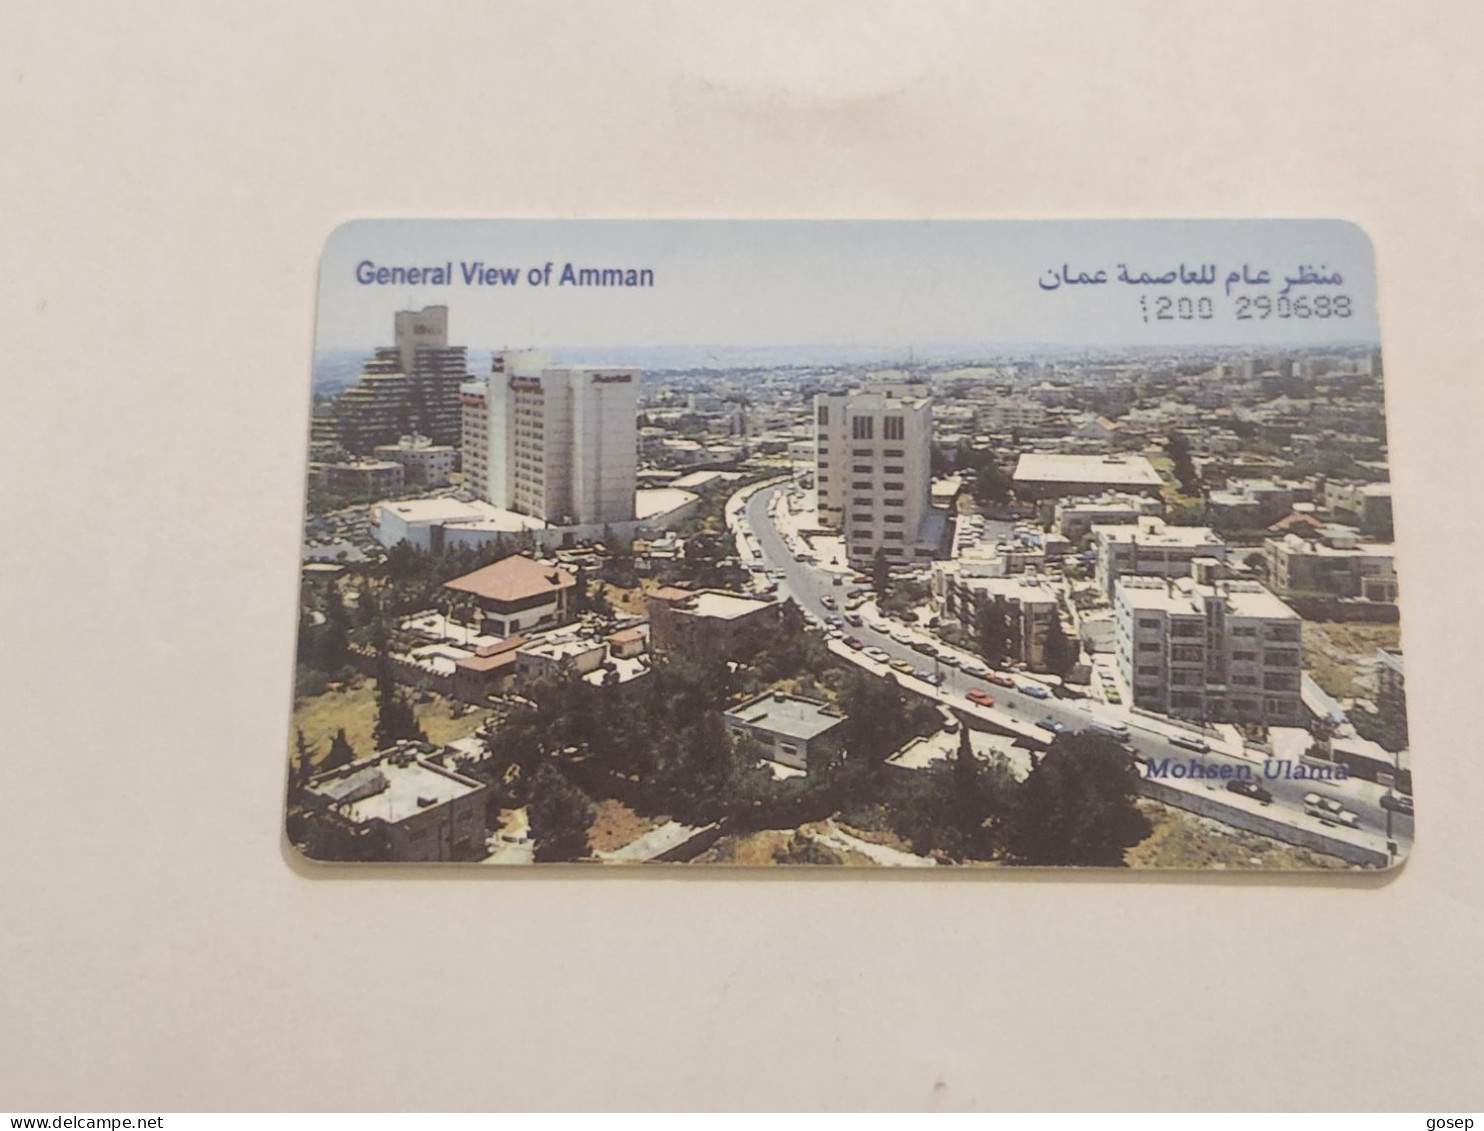 JORDAN-(JO-ALO-0028)-King Abdullah Mosque-(128)-(1200-290688)-(15JD)-(9/2000)-used Card+1card Prepiad Free - Jordanië